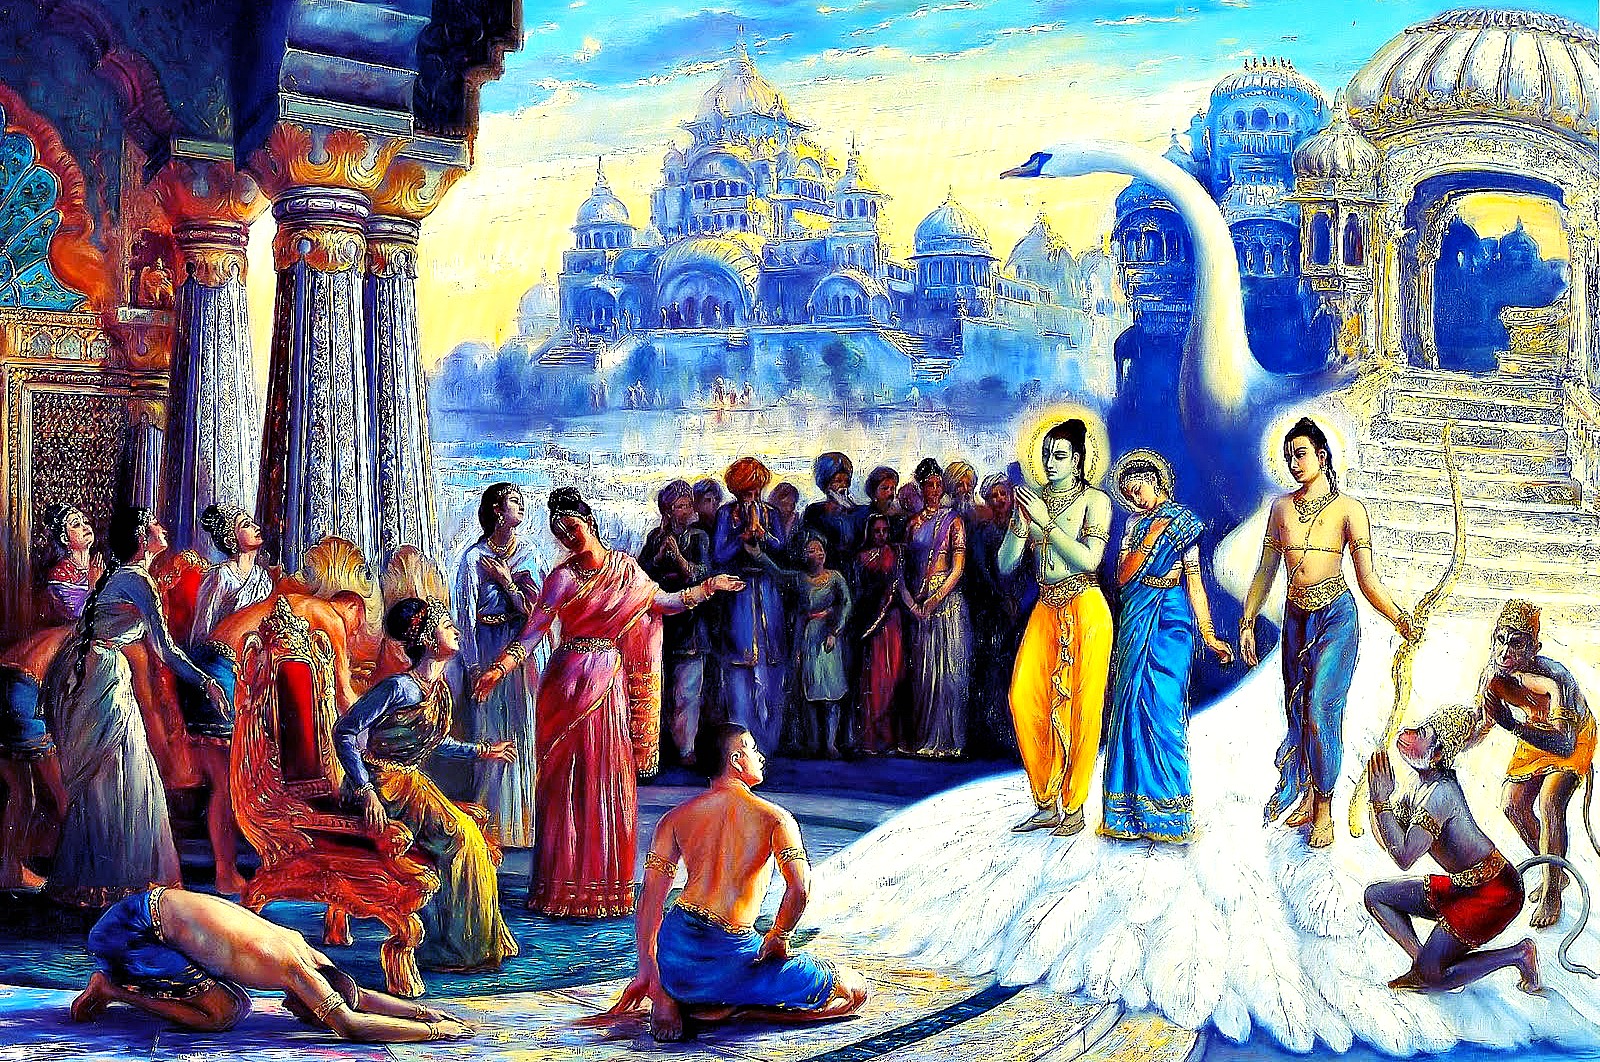 When Ravana prayed for Rama - Unknown Diwali Story